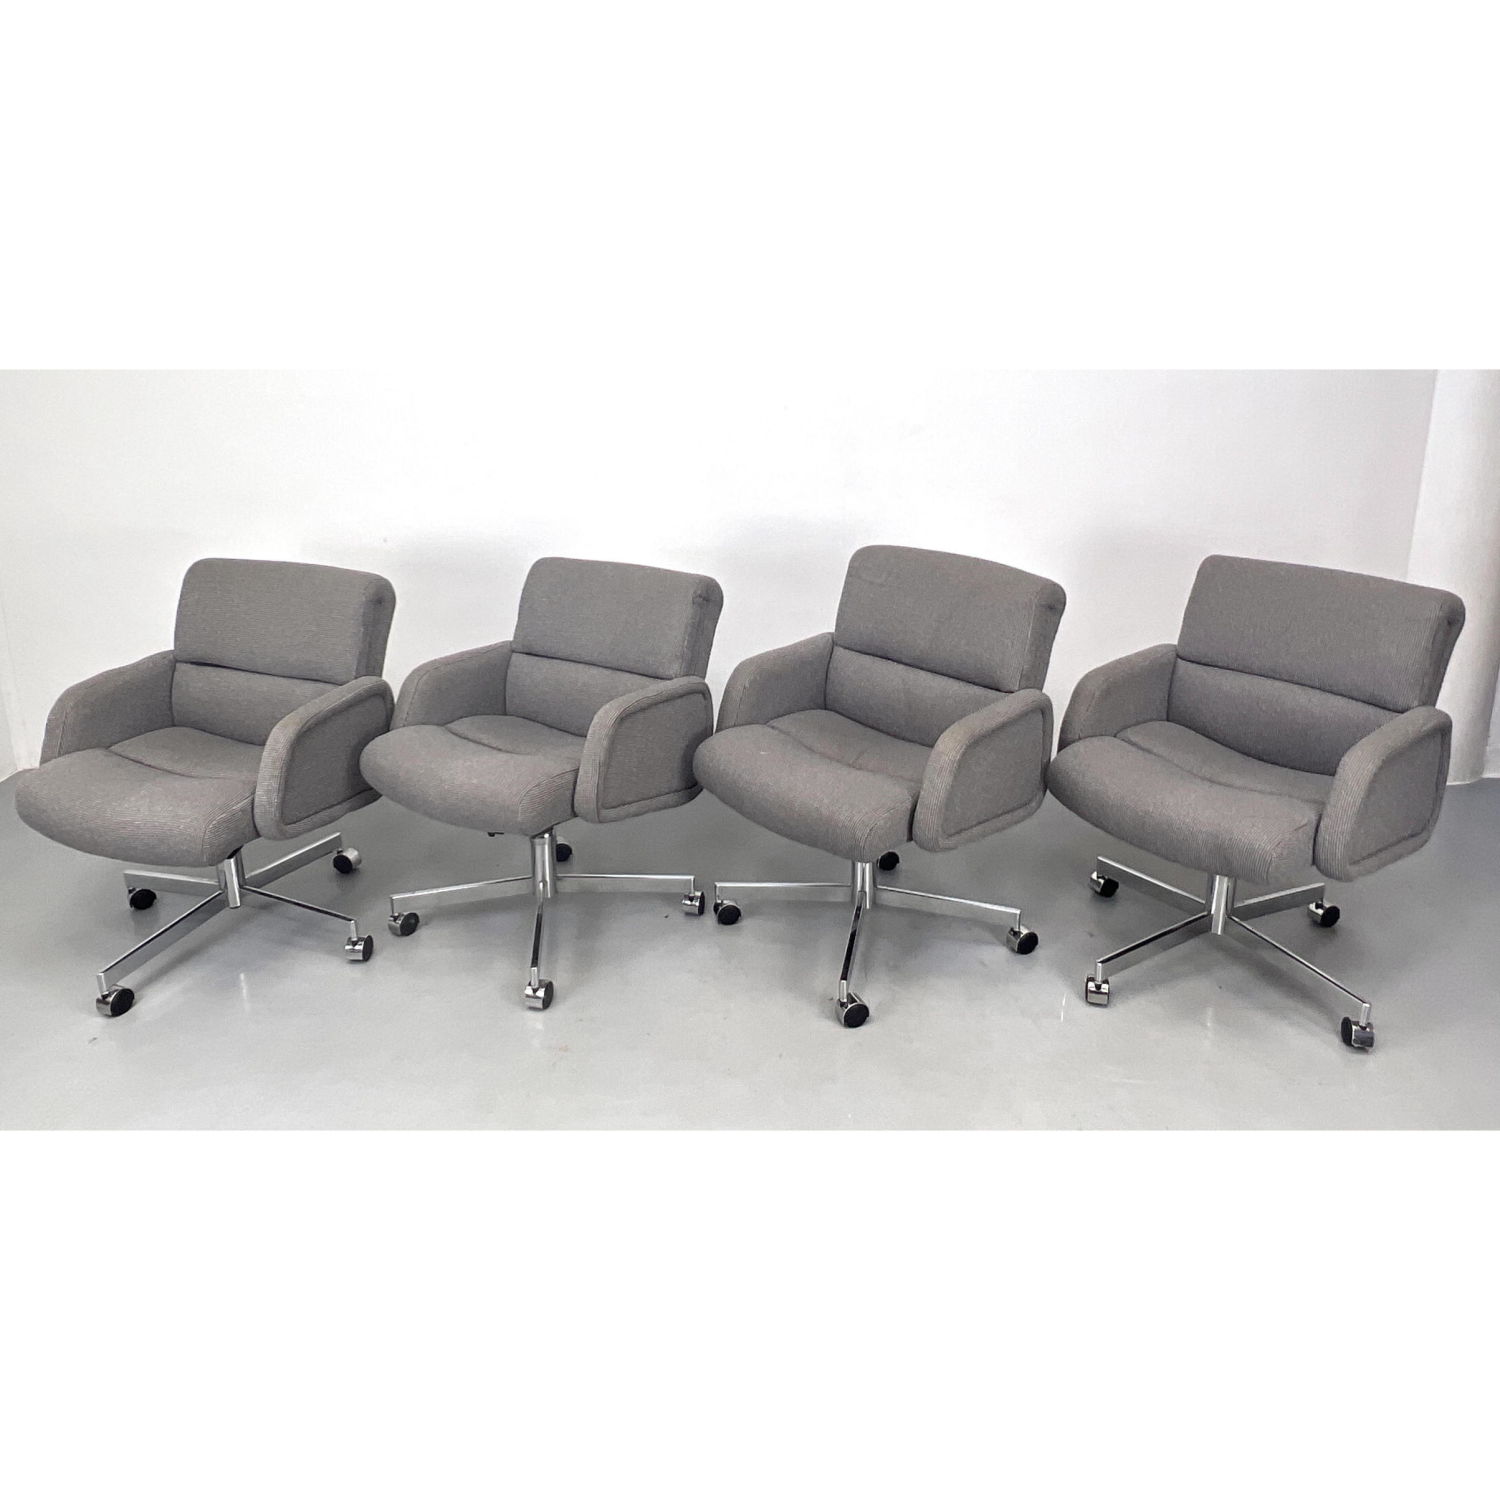 Set 4 JANSKO Office Desk Chairs  2fd02c